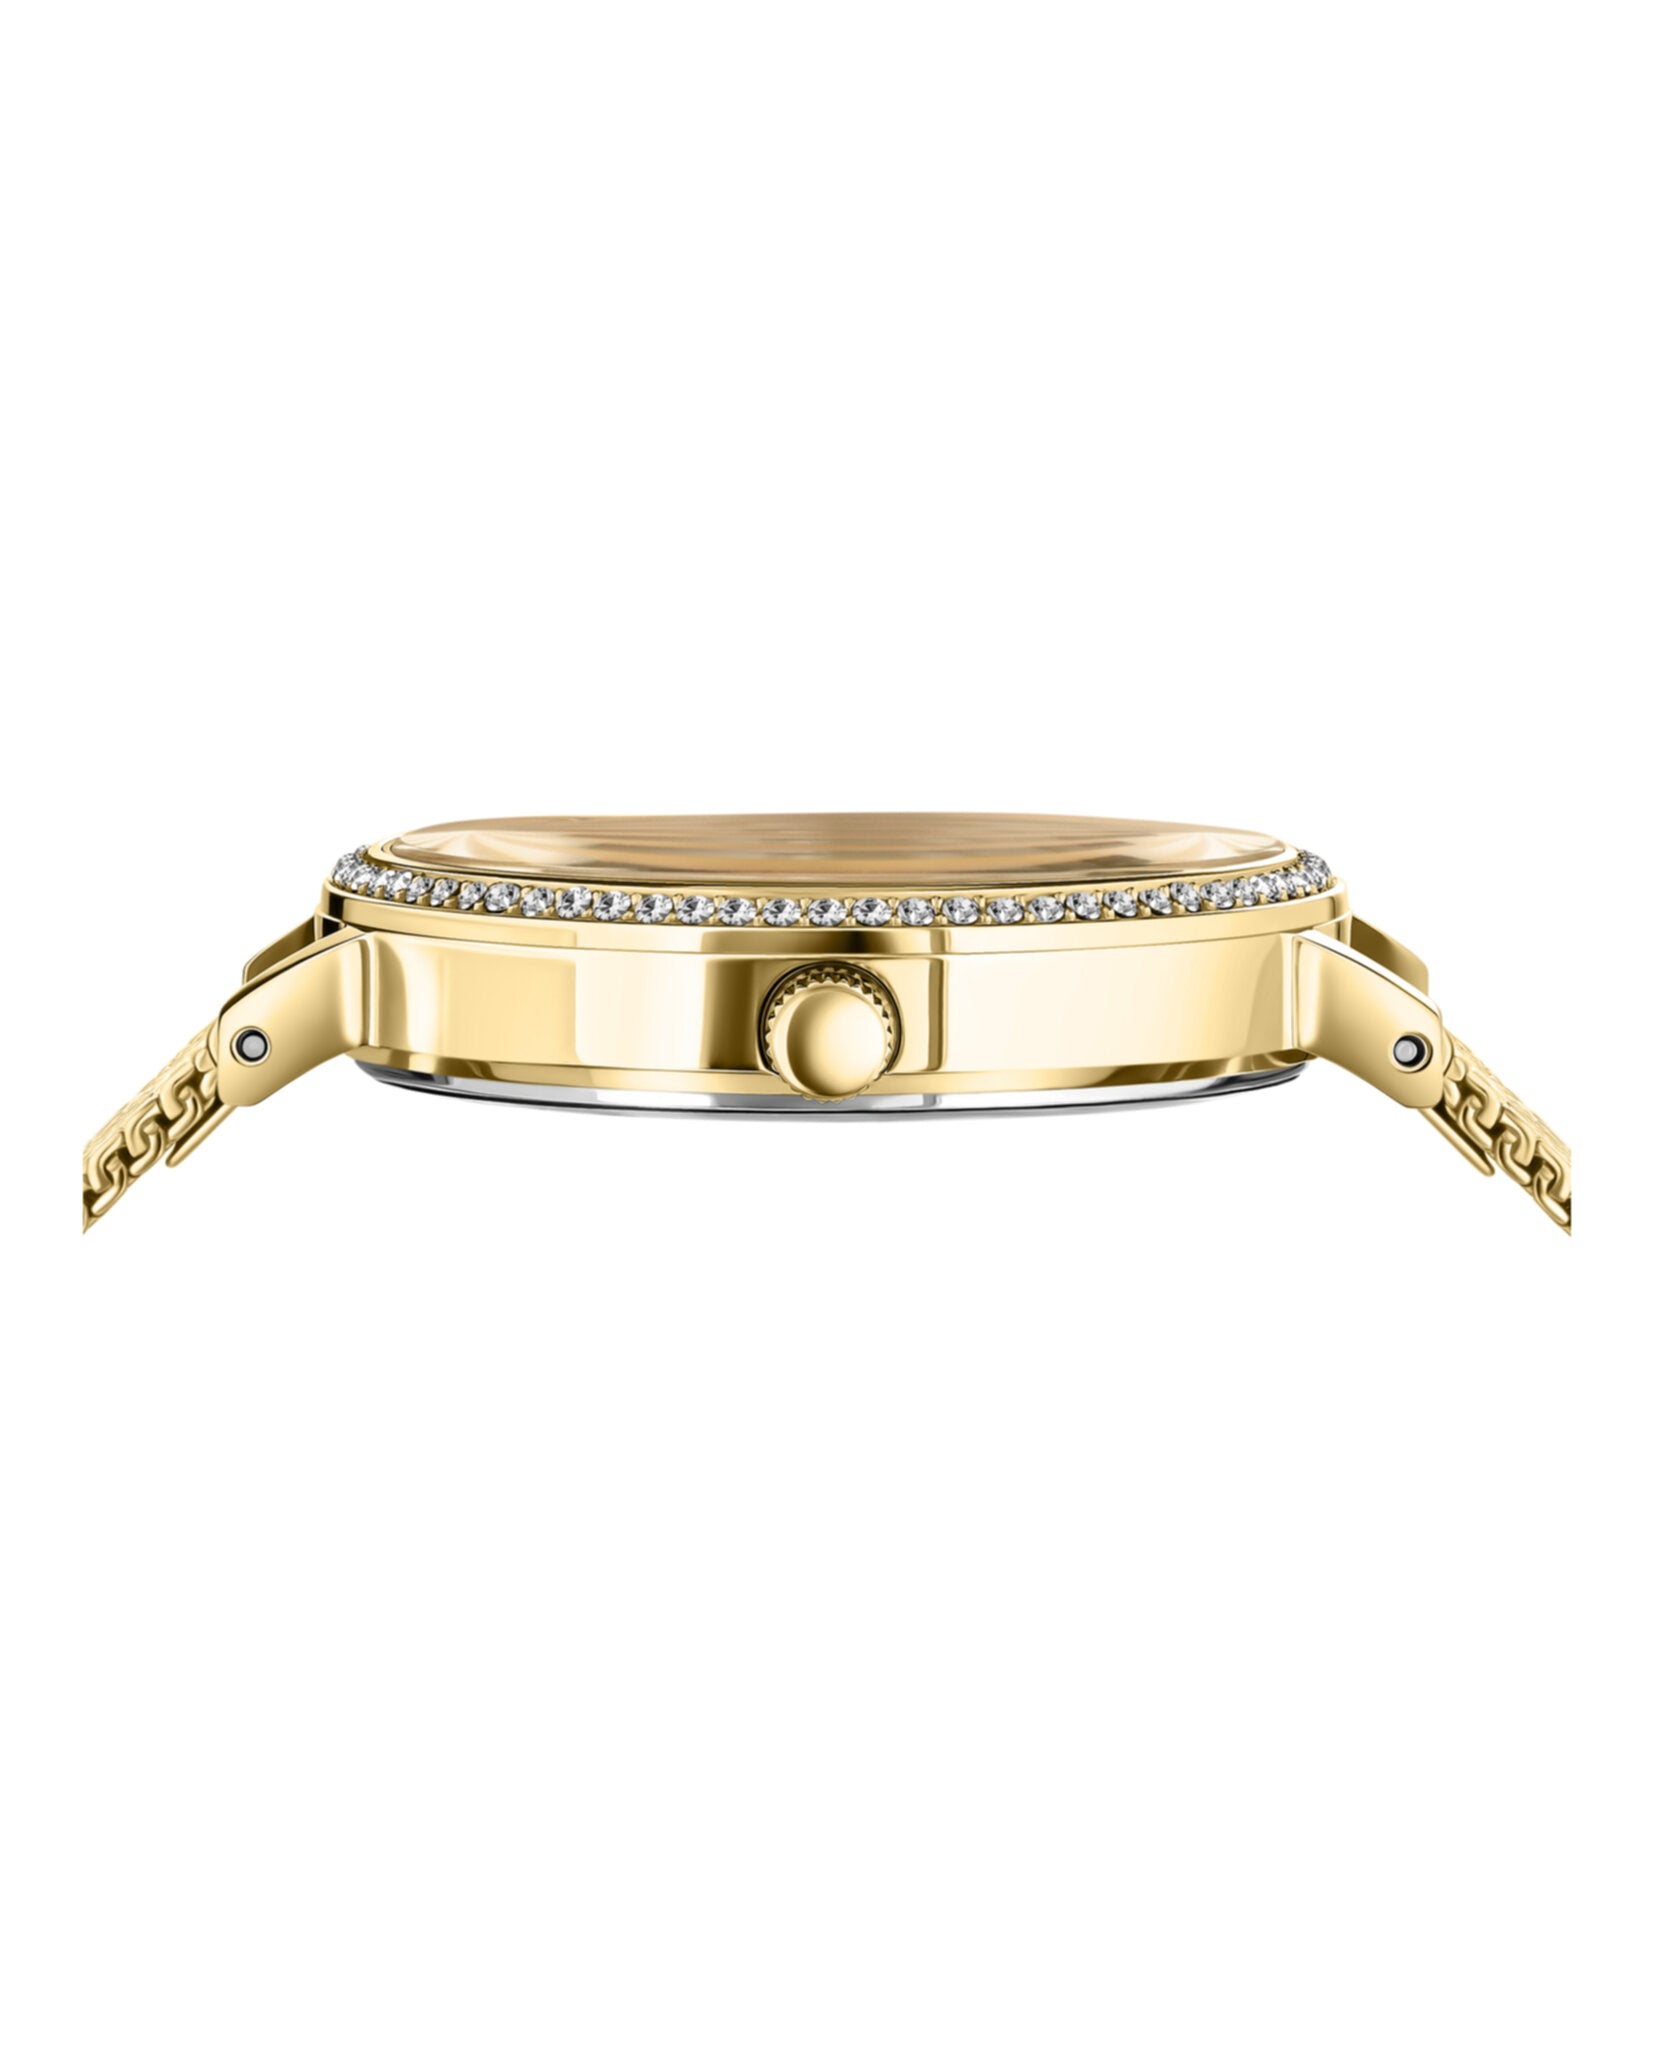 Mar Vista Crystal Bracelet Watch